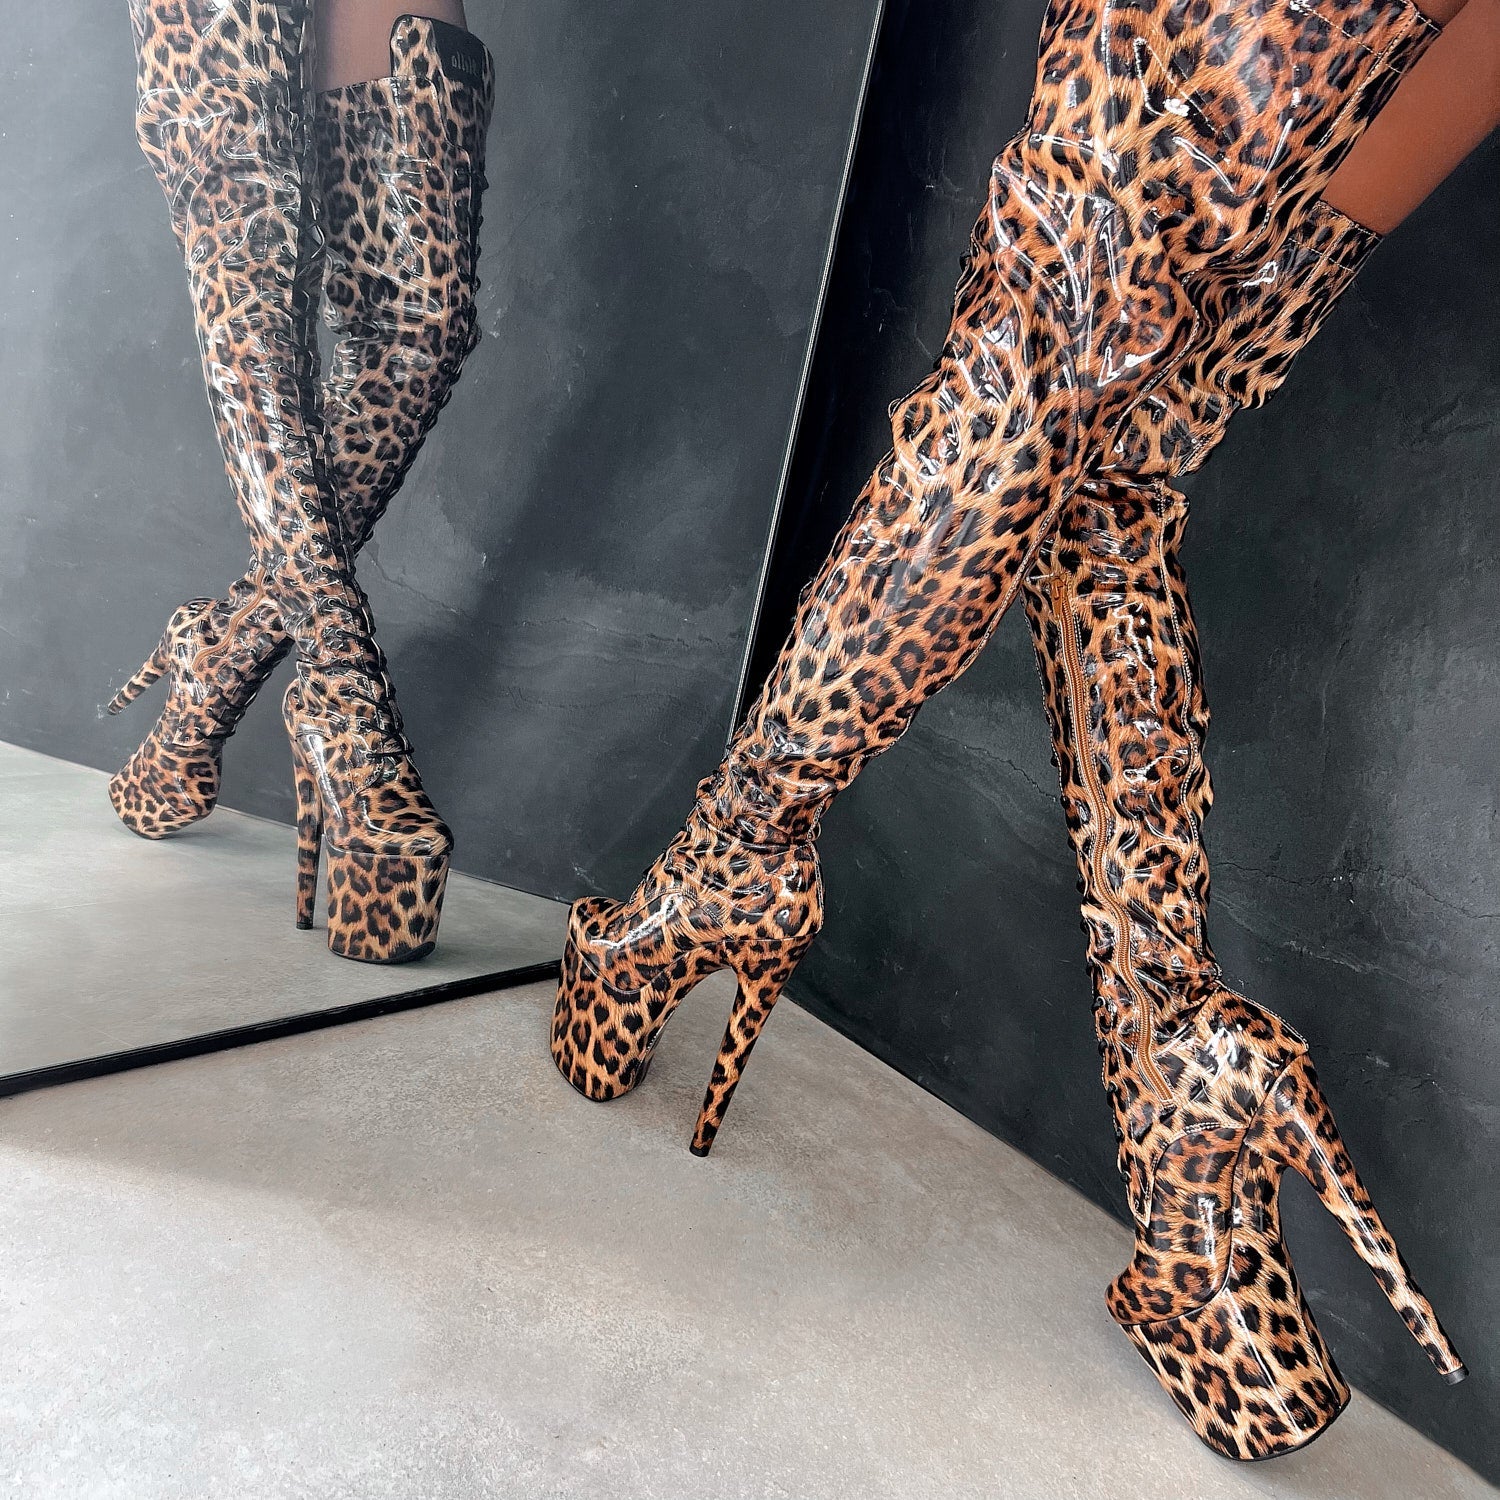 Leopard Thigh High - 8 INCH + SP, stripper shoe, stripper heel, pole heel, not a pleaser, platform, dancer, pole dance, floor work